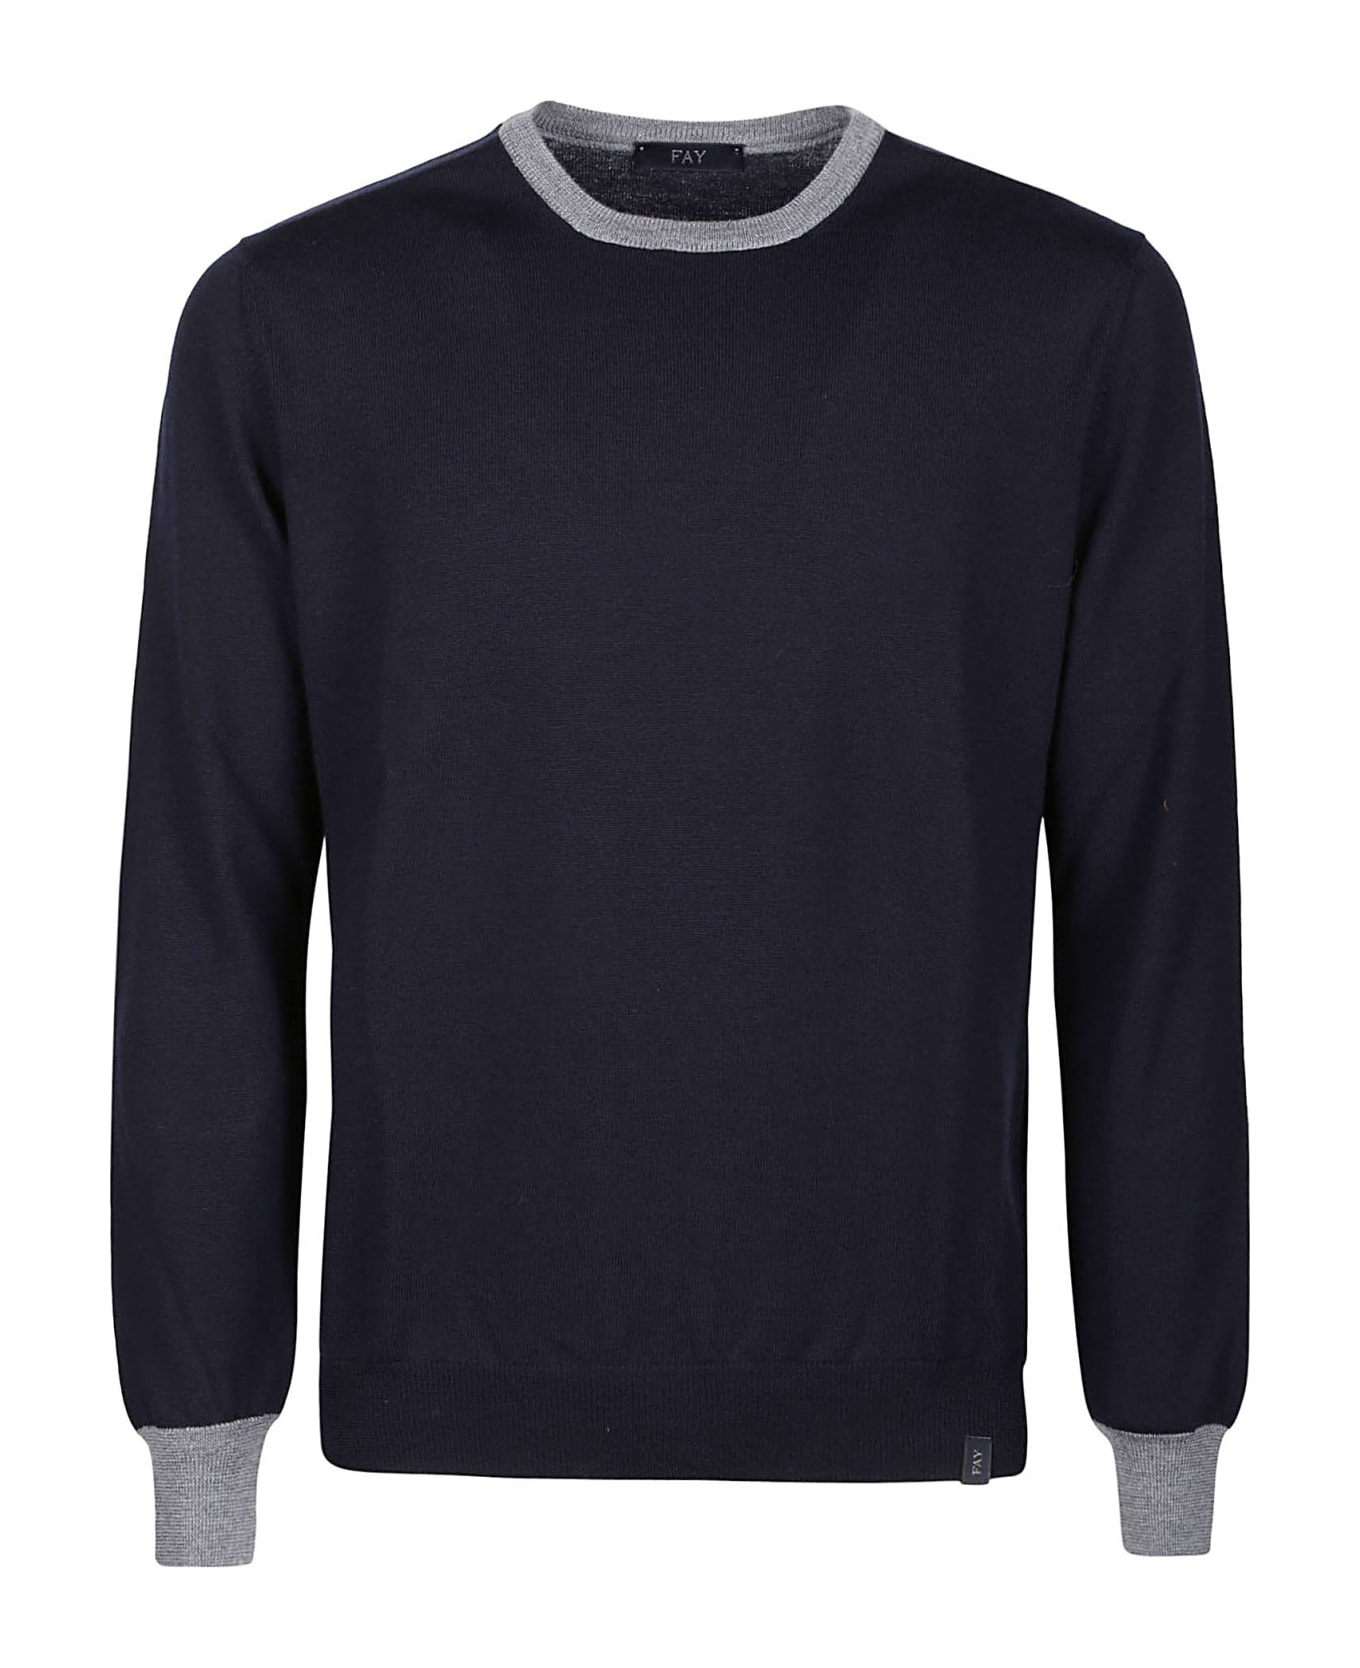 Fay Round Neck Sweater - A Blu Navy/grigio Blu/platino